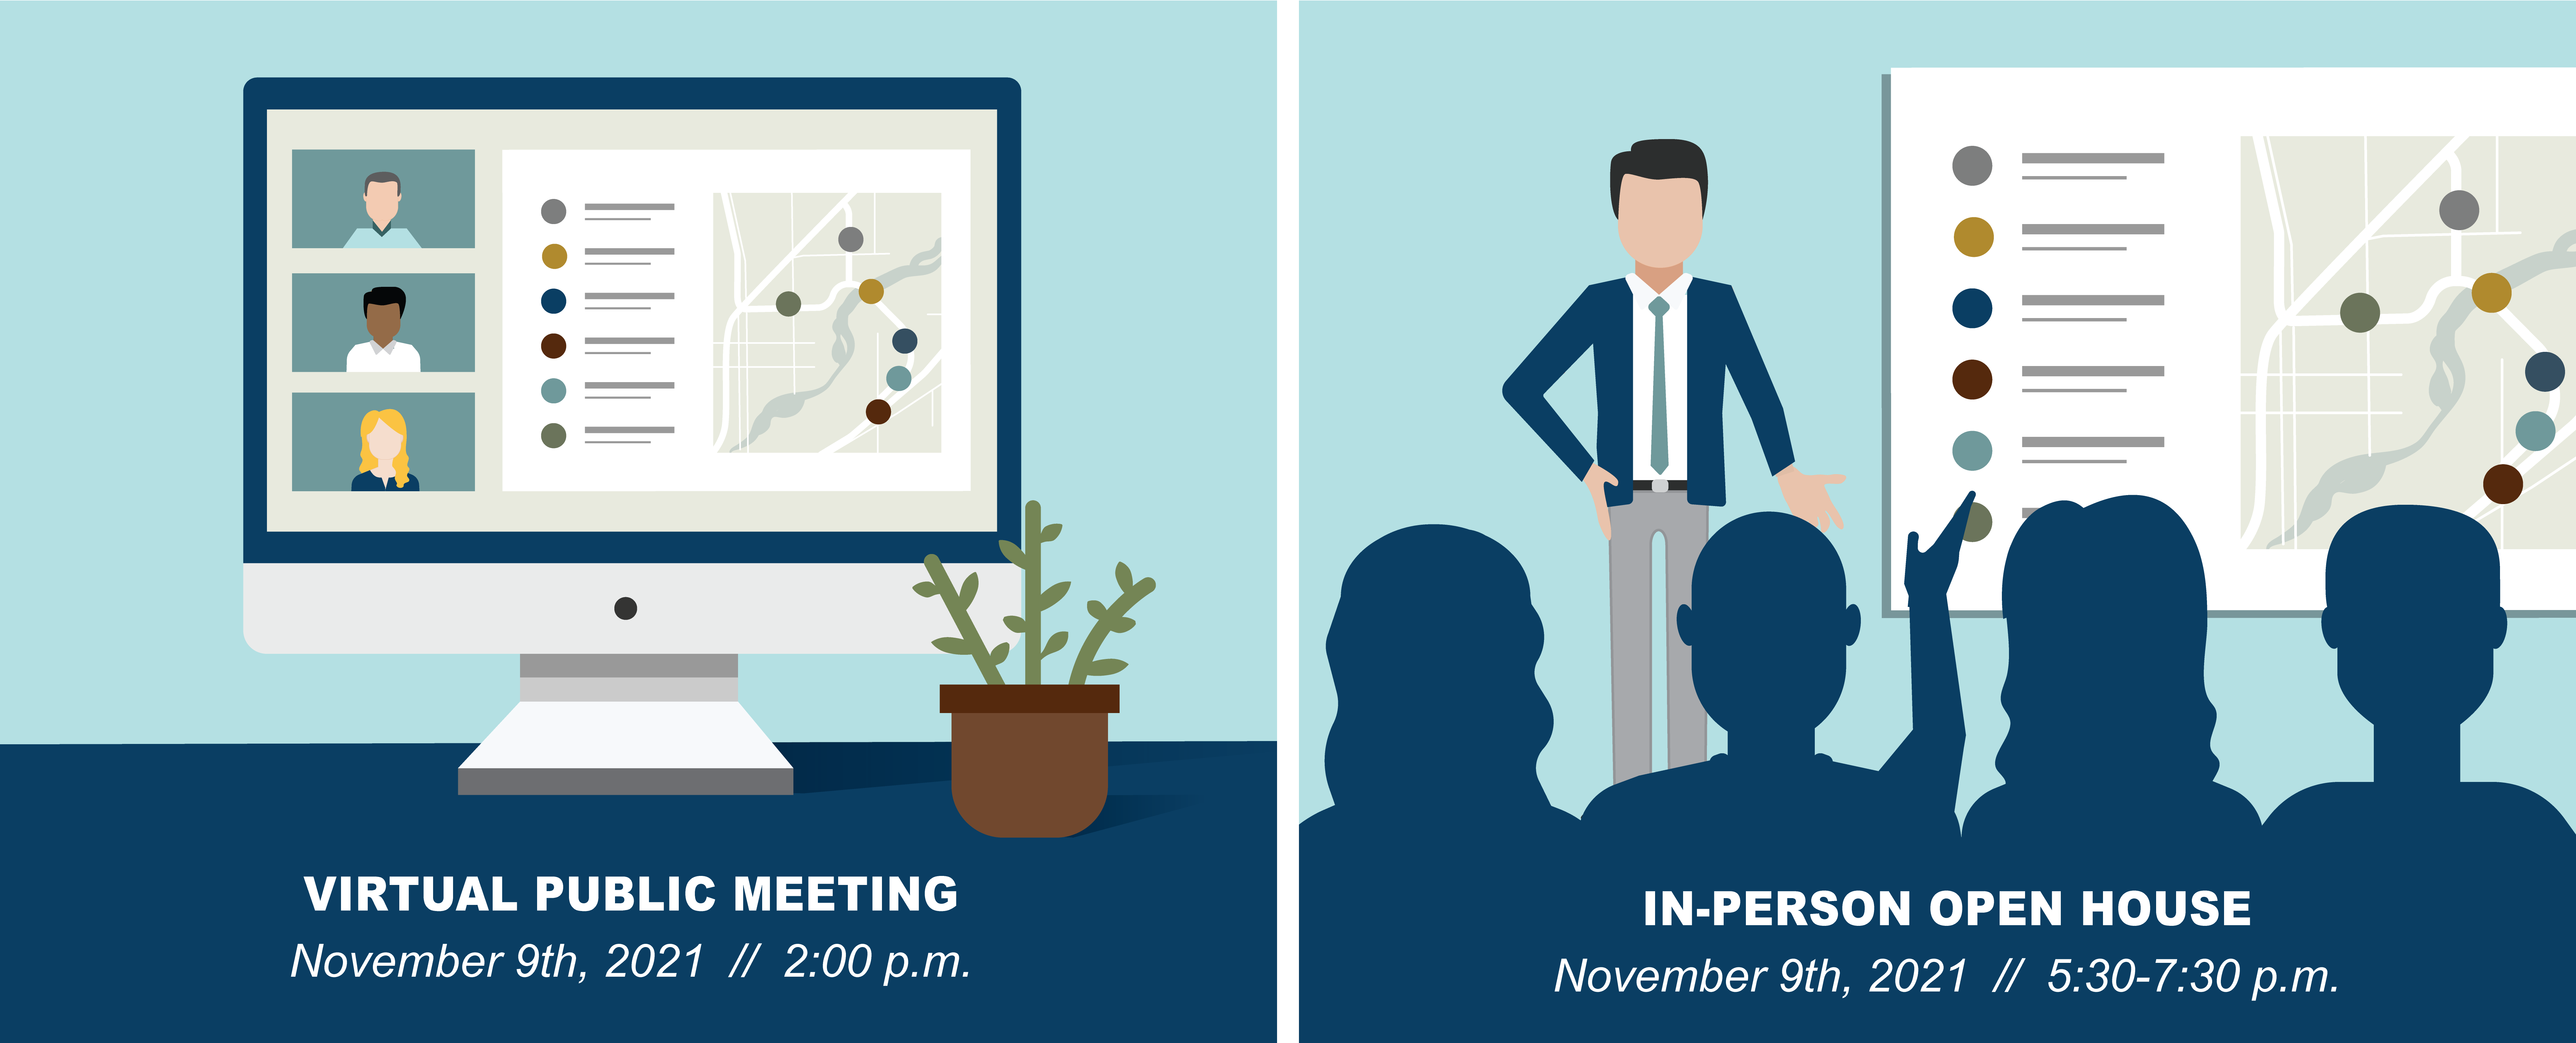 Public meeting info-graphic